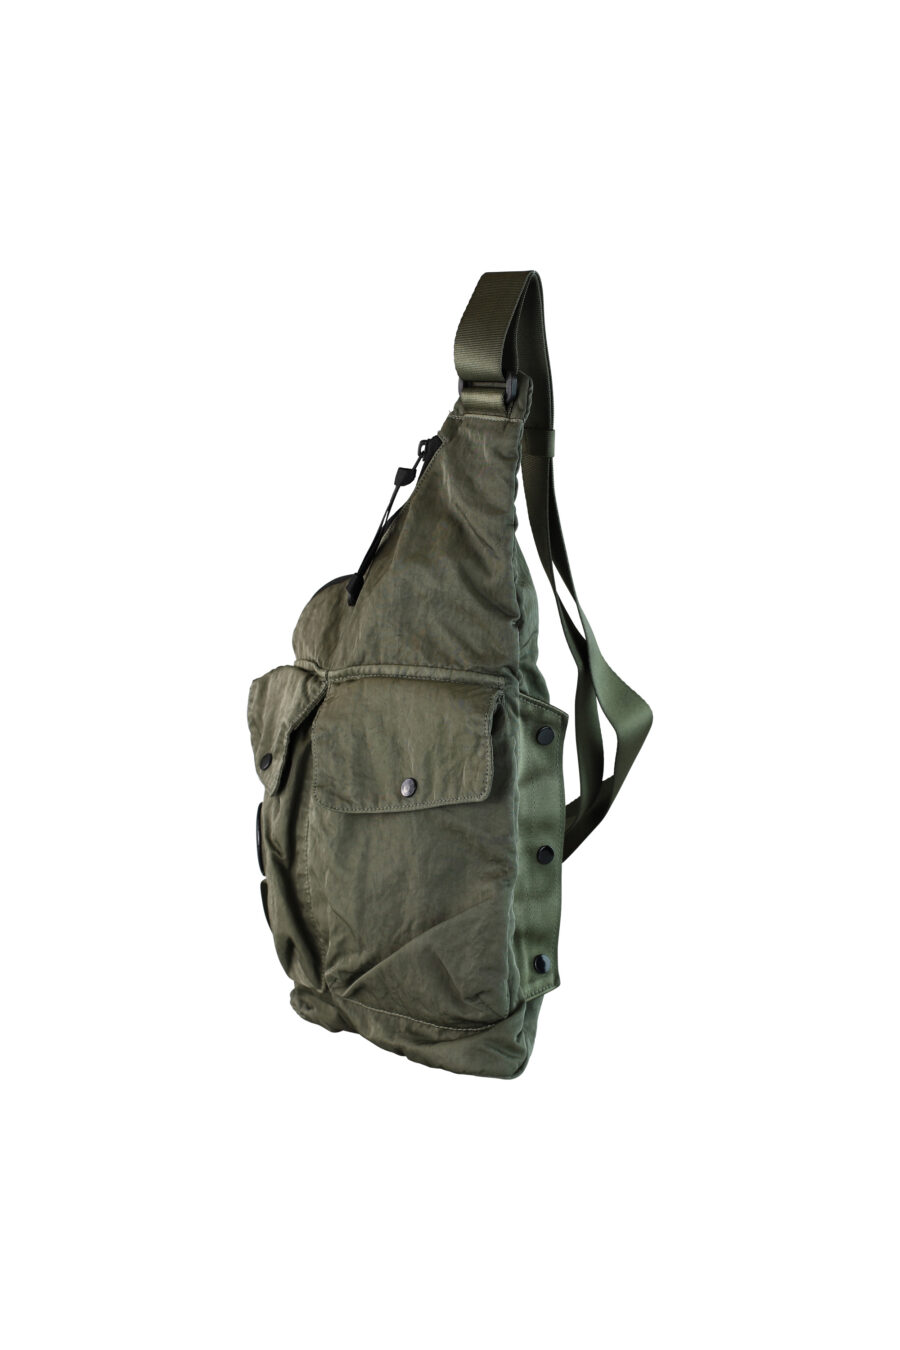 Green crossbody bag with pockets and circular mini logo - IMG 0424